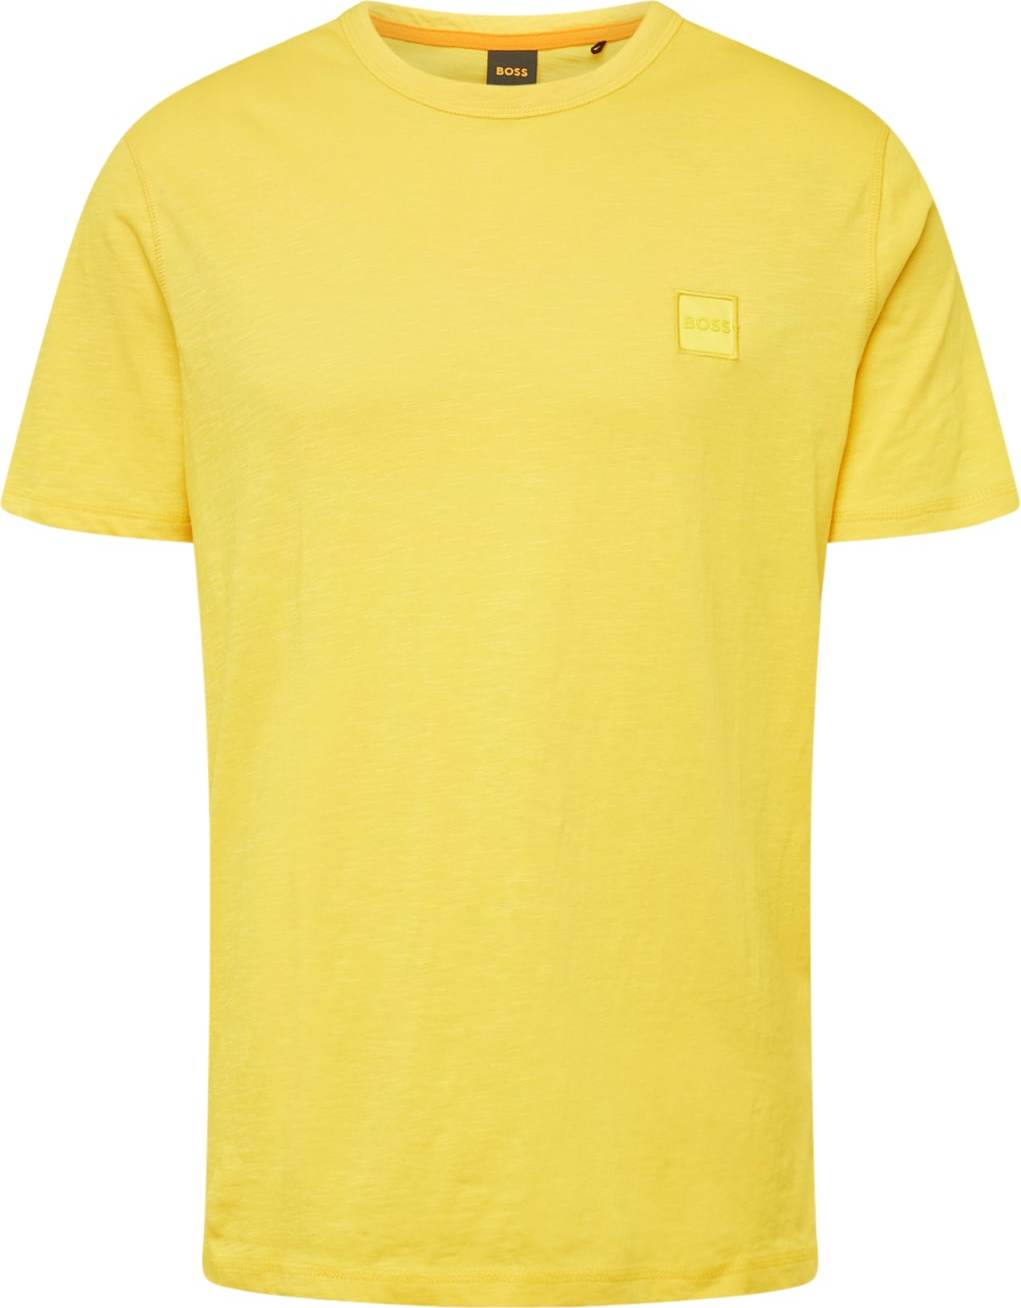 Tričko 'Tegood' Boss Orange žlutá